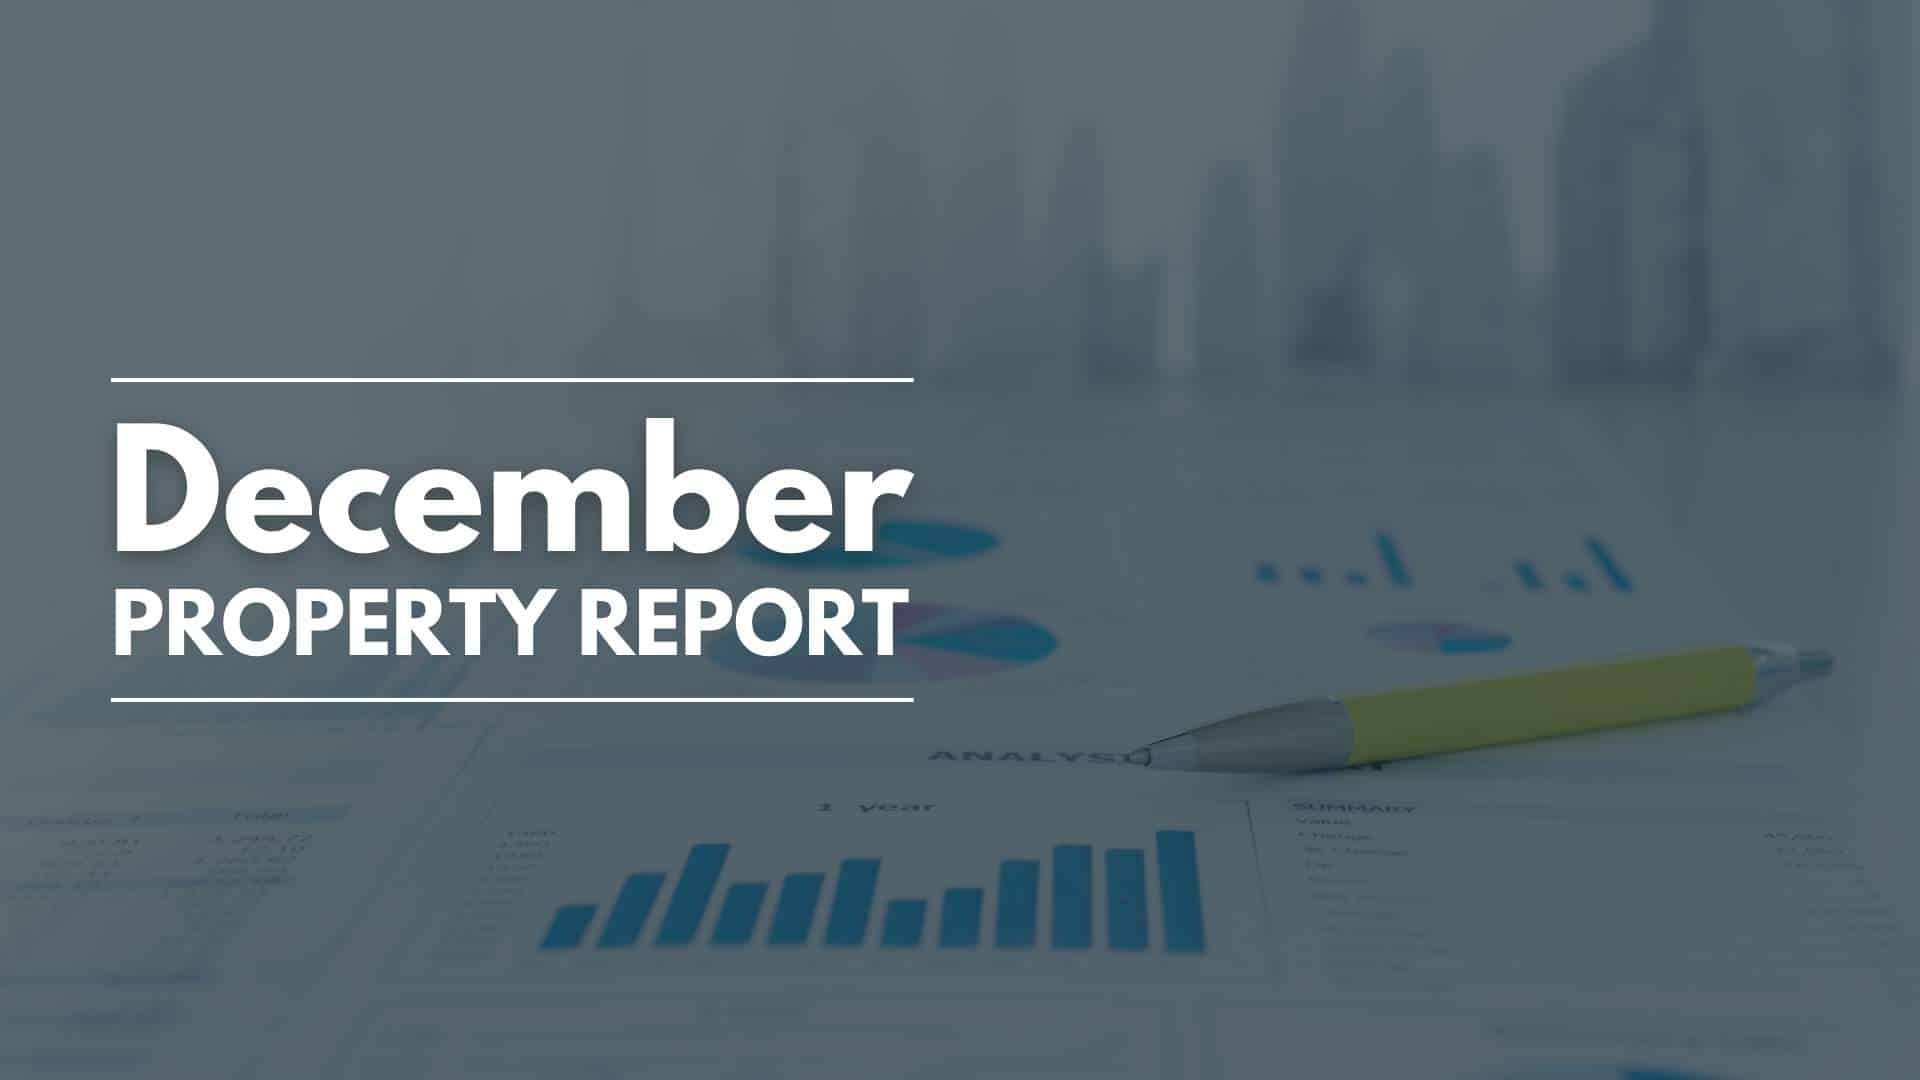 December’s property market analysis